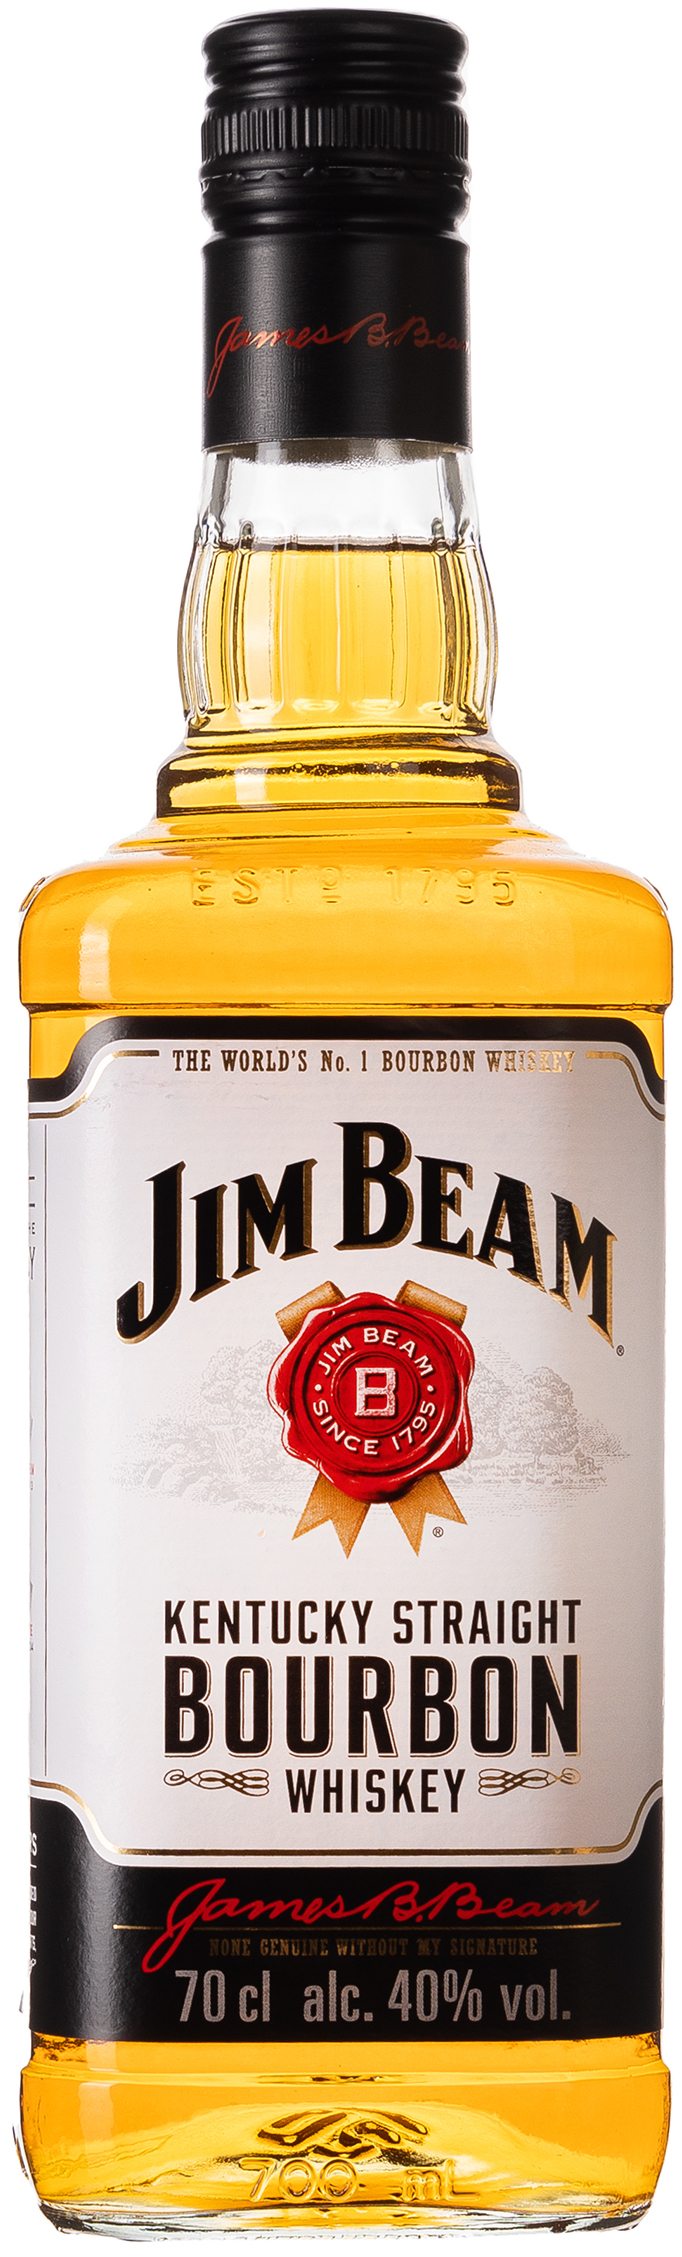 Jim Beam Honey 32,5% vol. 0,7L